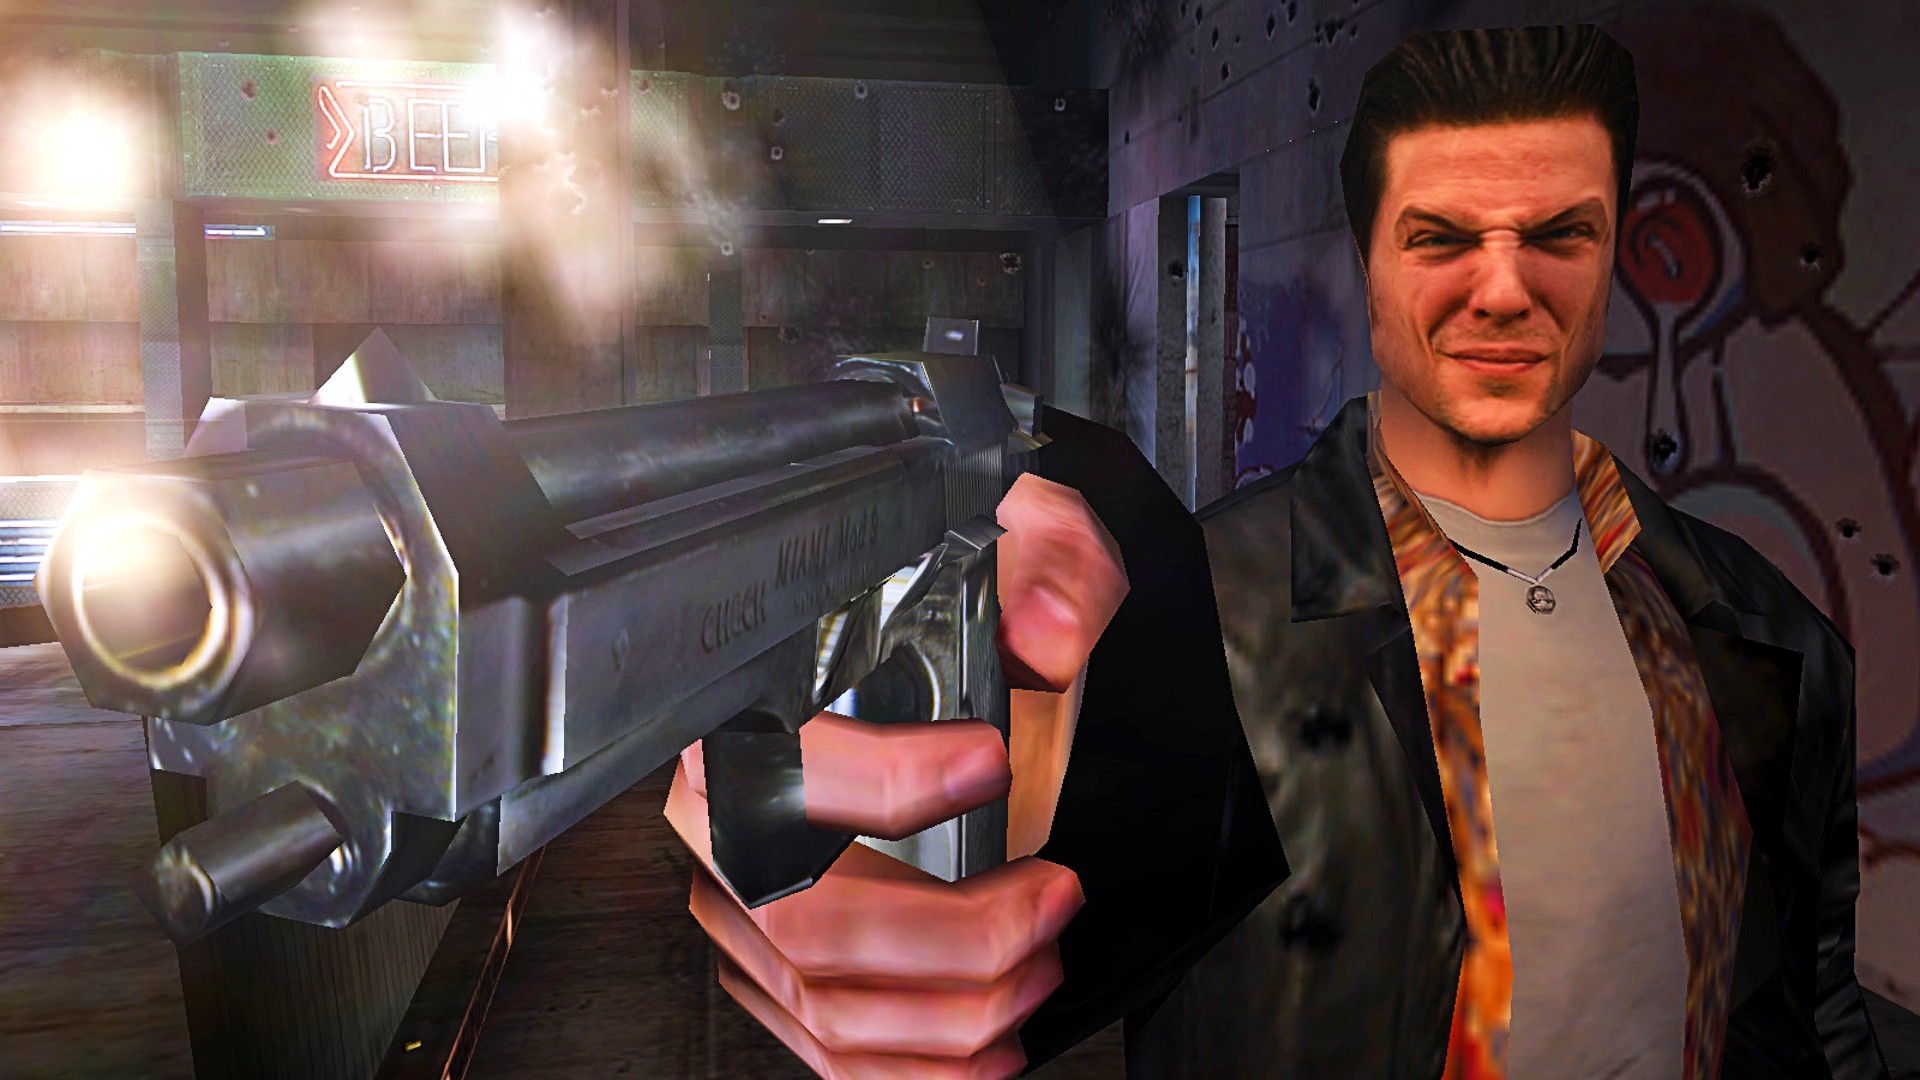 Max Payne Remake gets development update from Remedy - RockstarINTEL